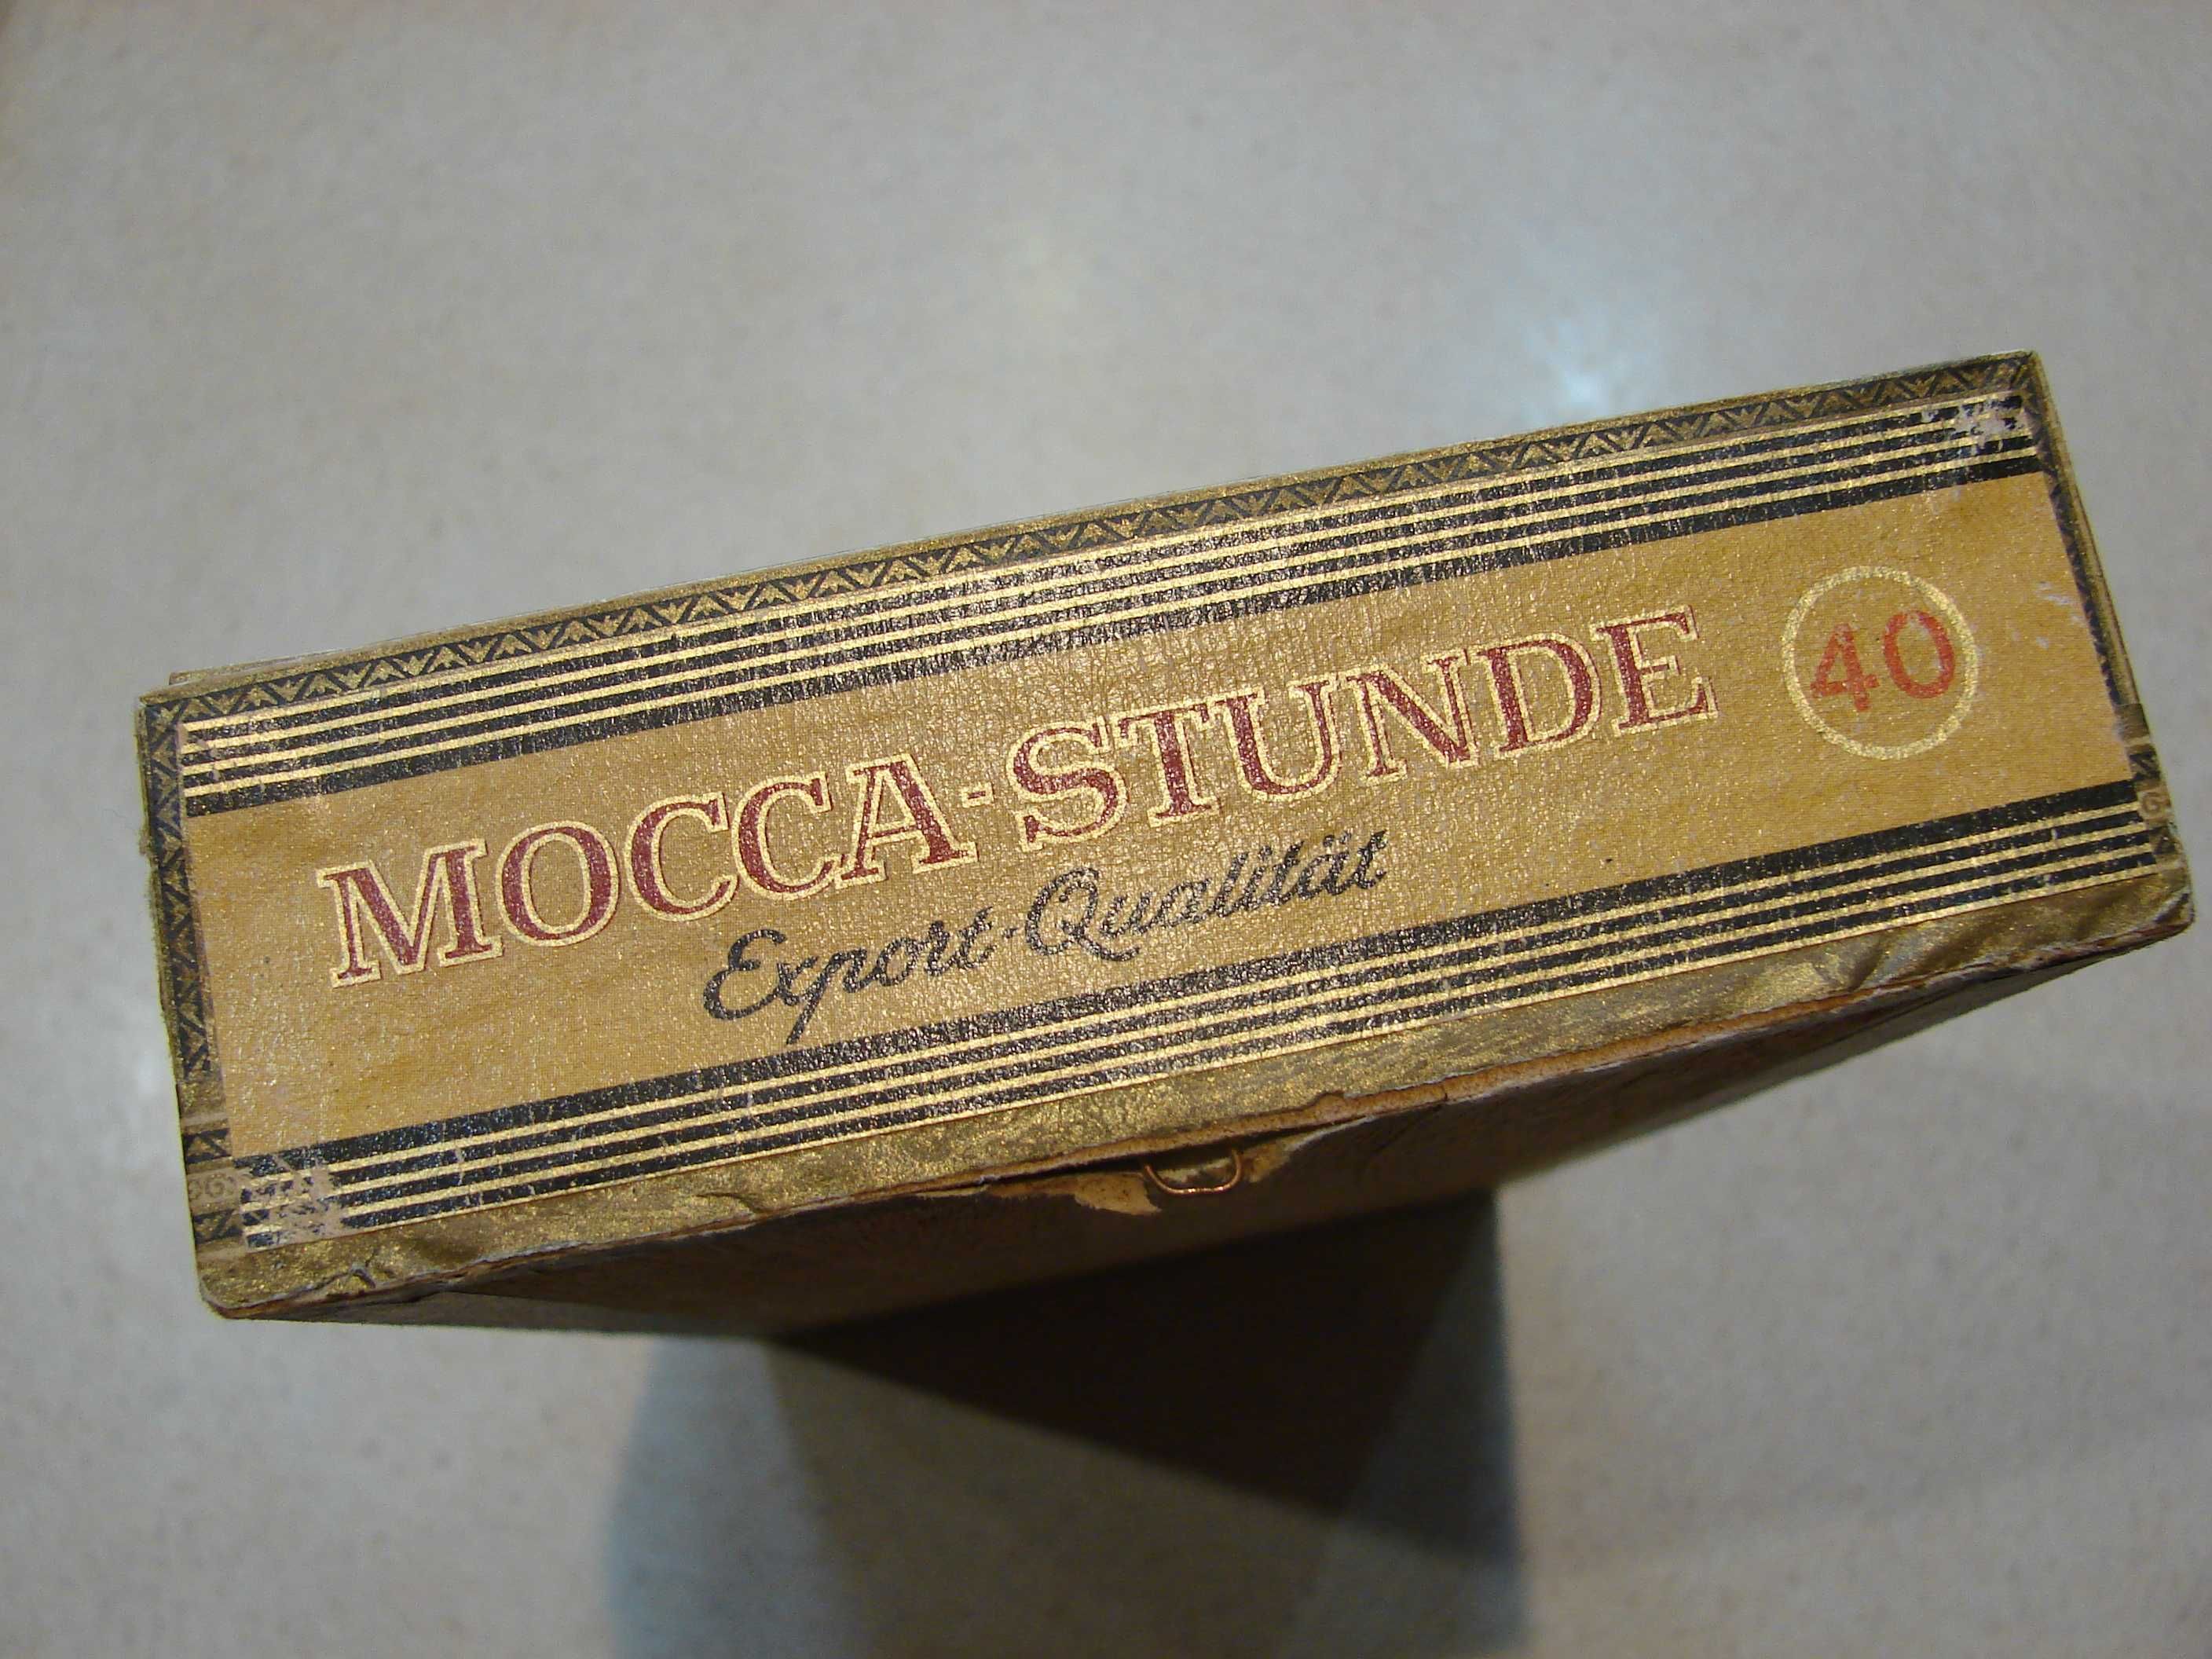 Stare kolekcjonerskie pudełko MOCCA STUNDE Export Qualitat HELHA